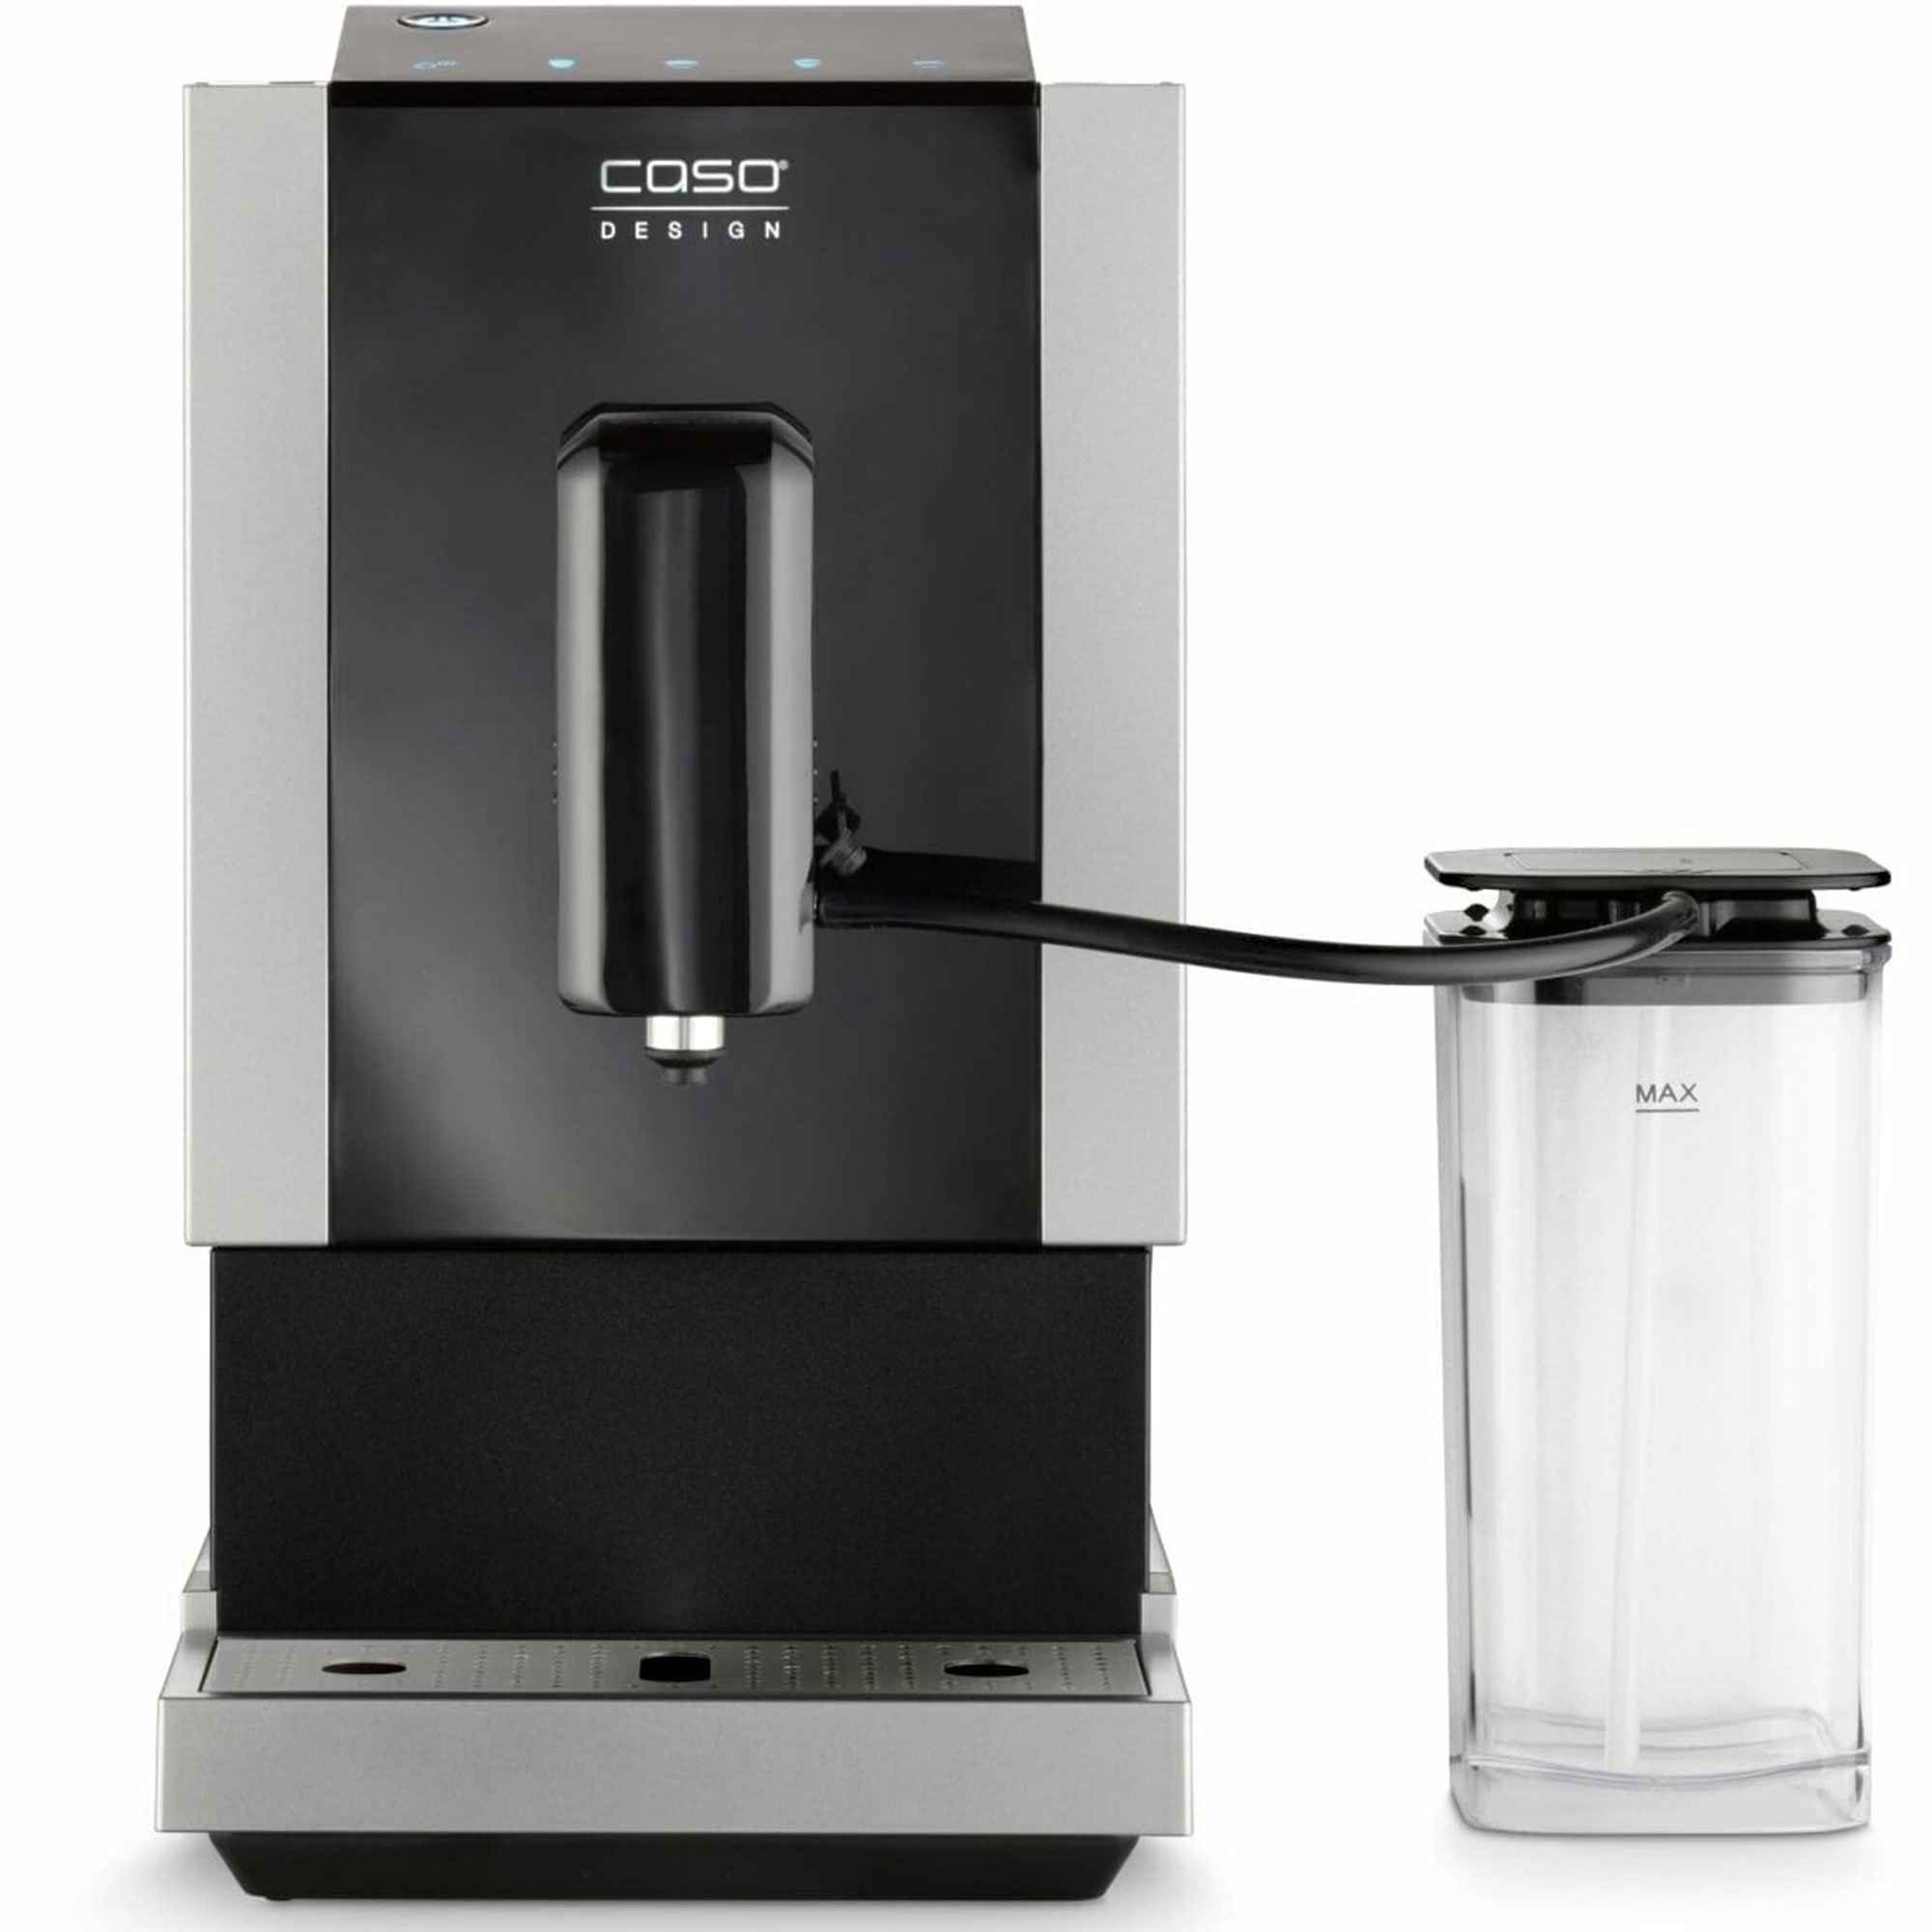 Caso Café Crema Touch fuldautomatisk kaffemaskine